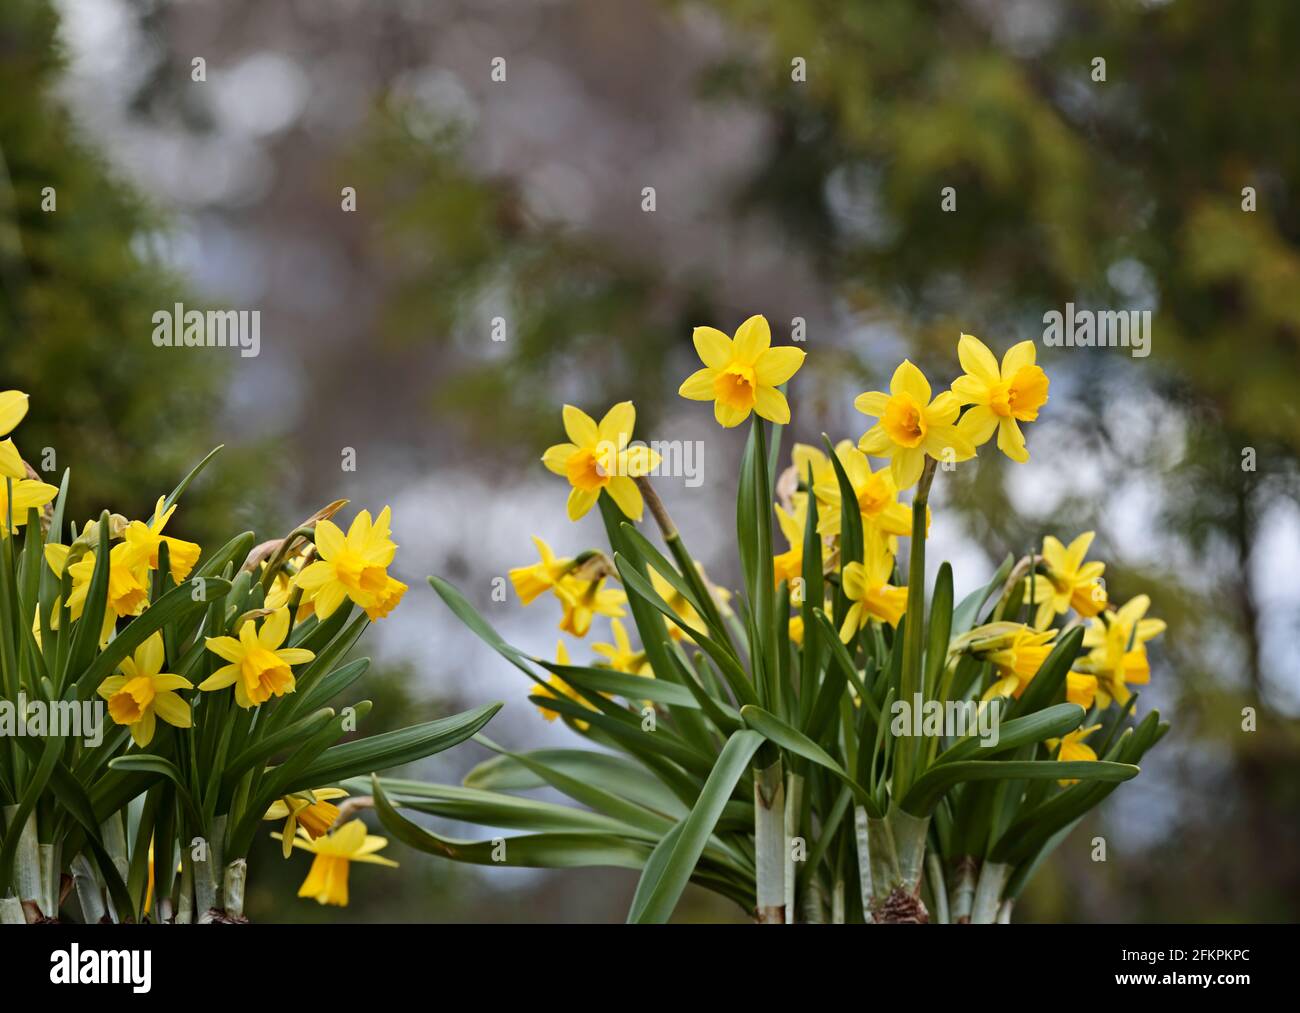 Beautiful yellow daffodils blooming vigorously in the garden Stock Photo